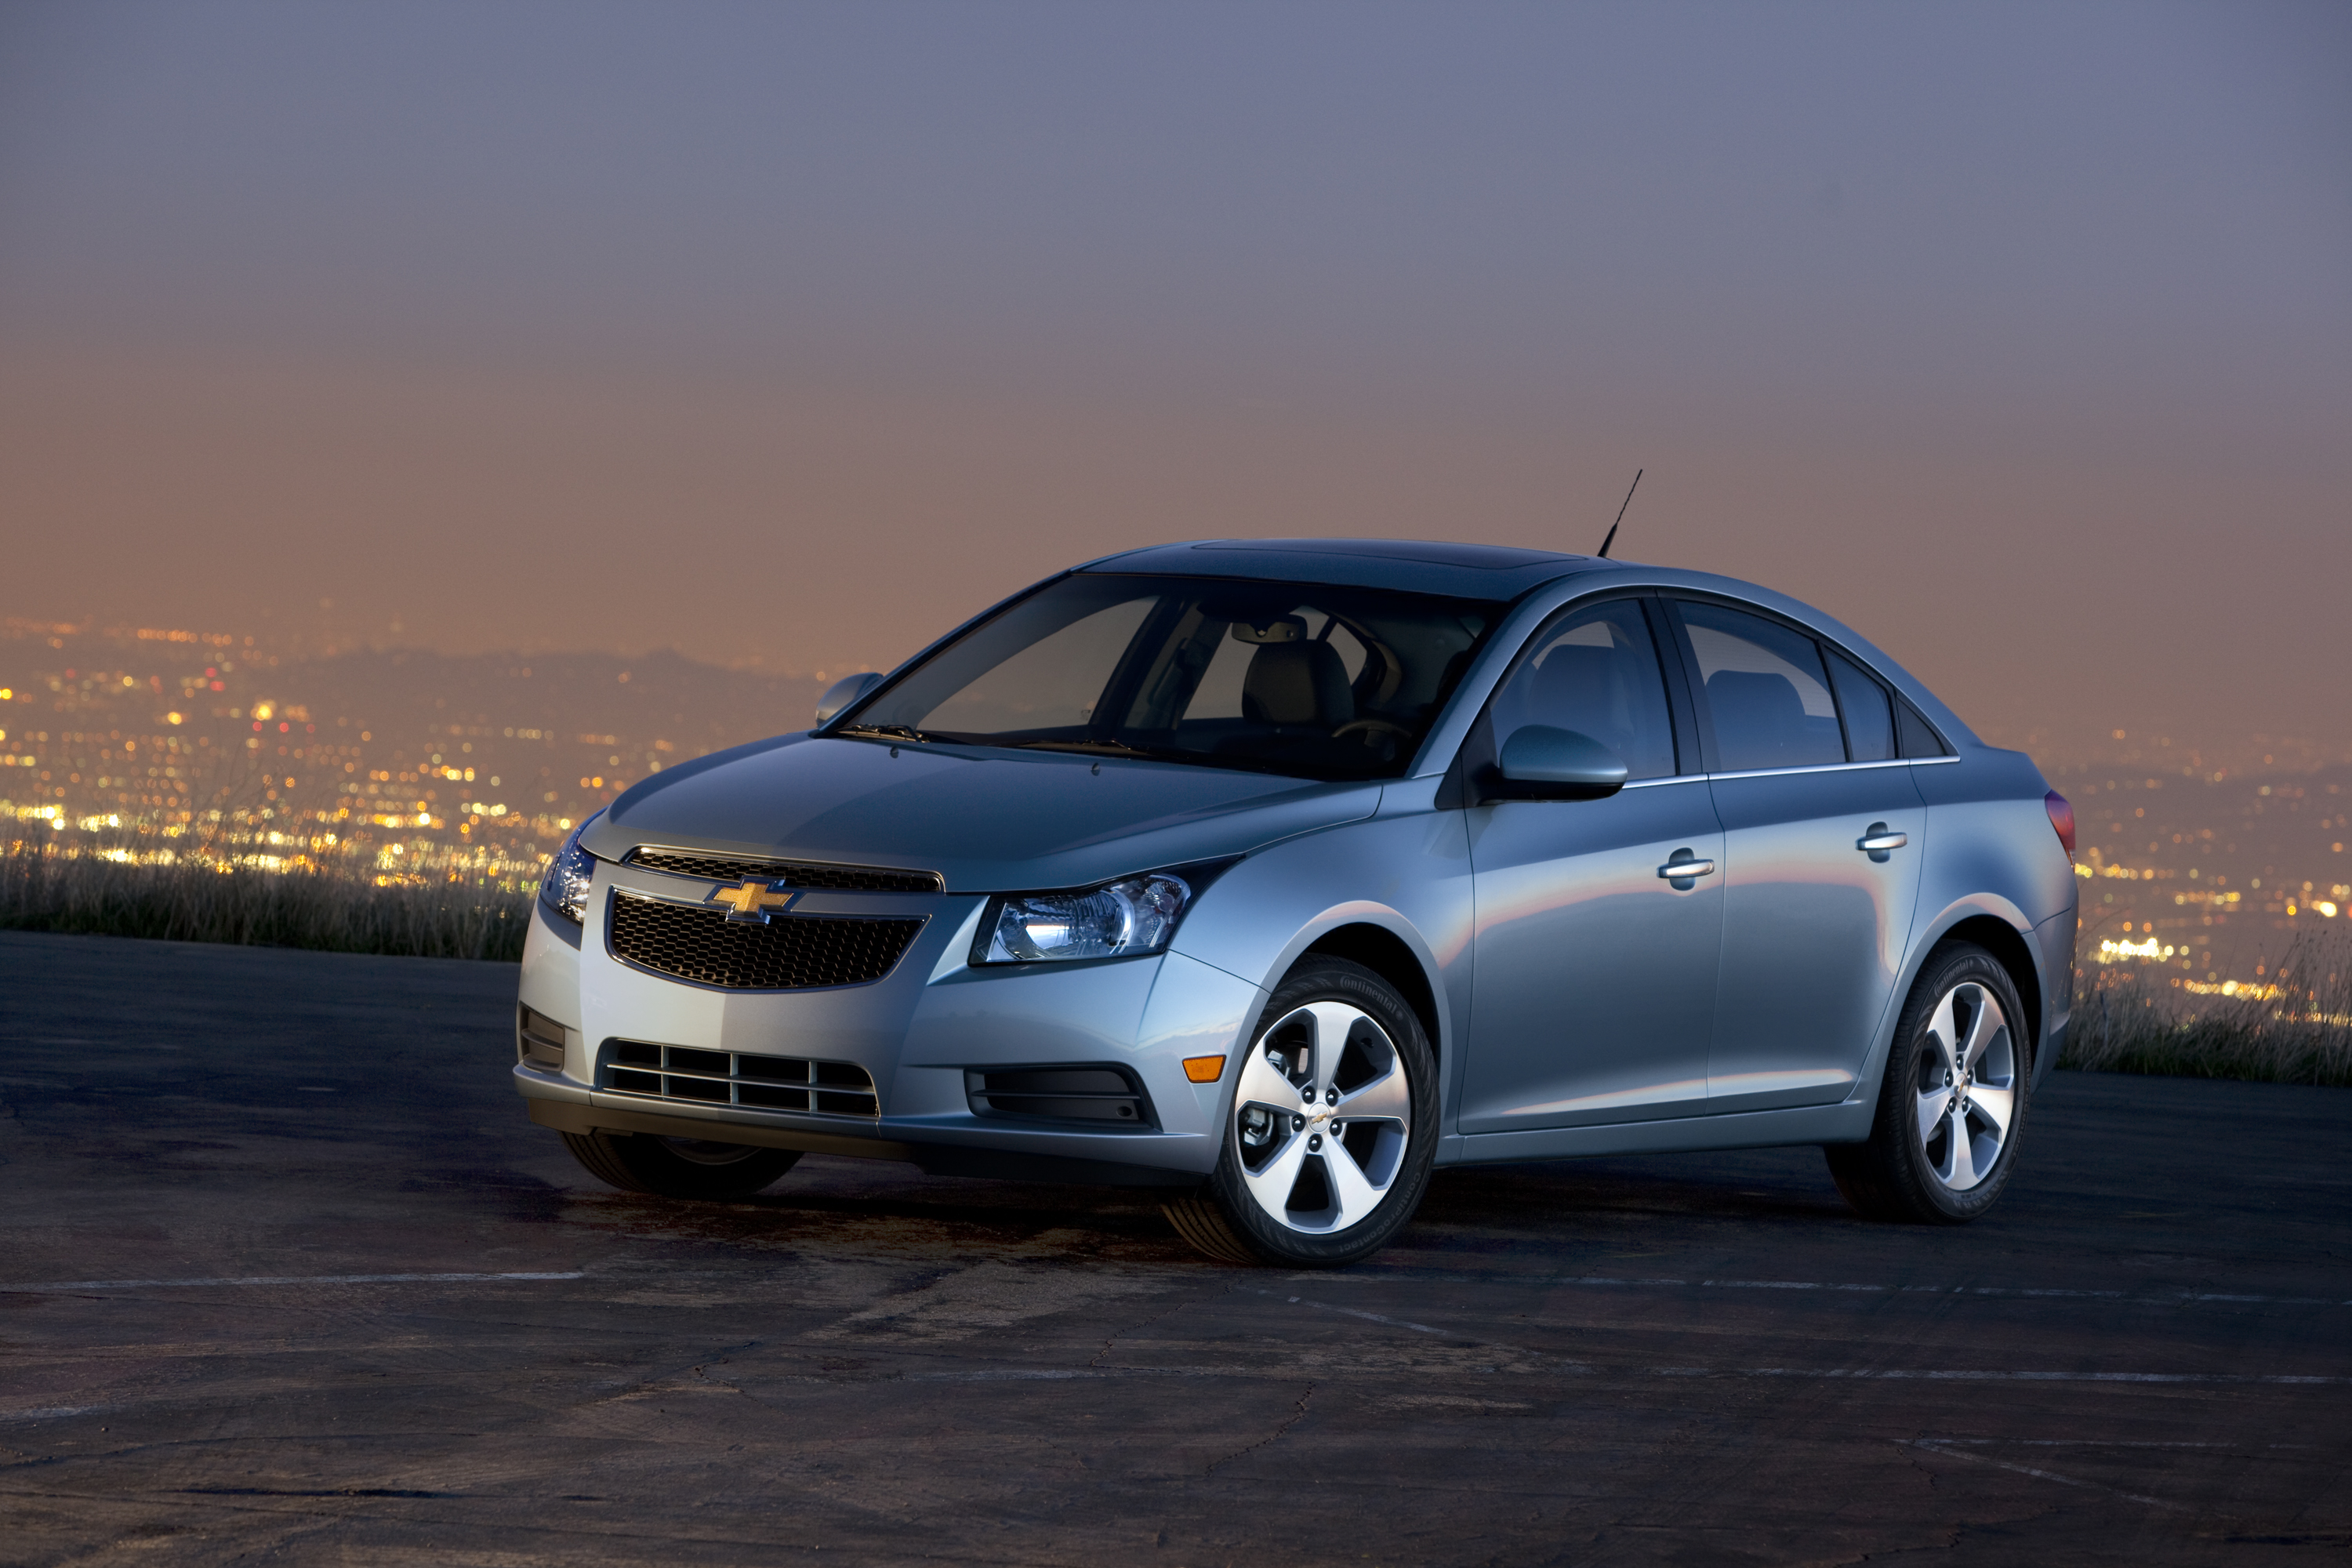 Review: Chevrolet Cruze Eco Automatic